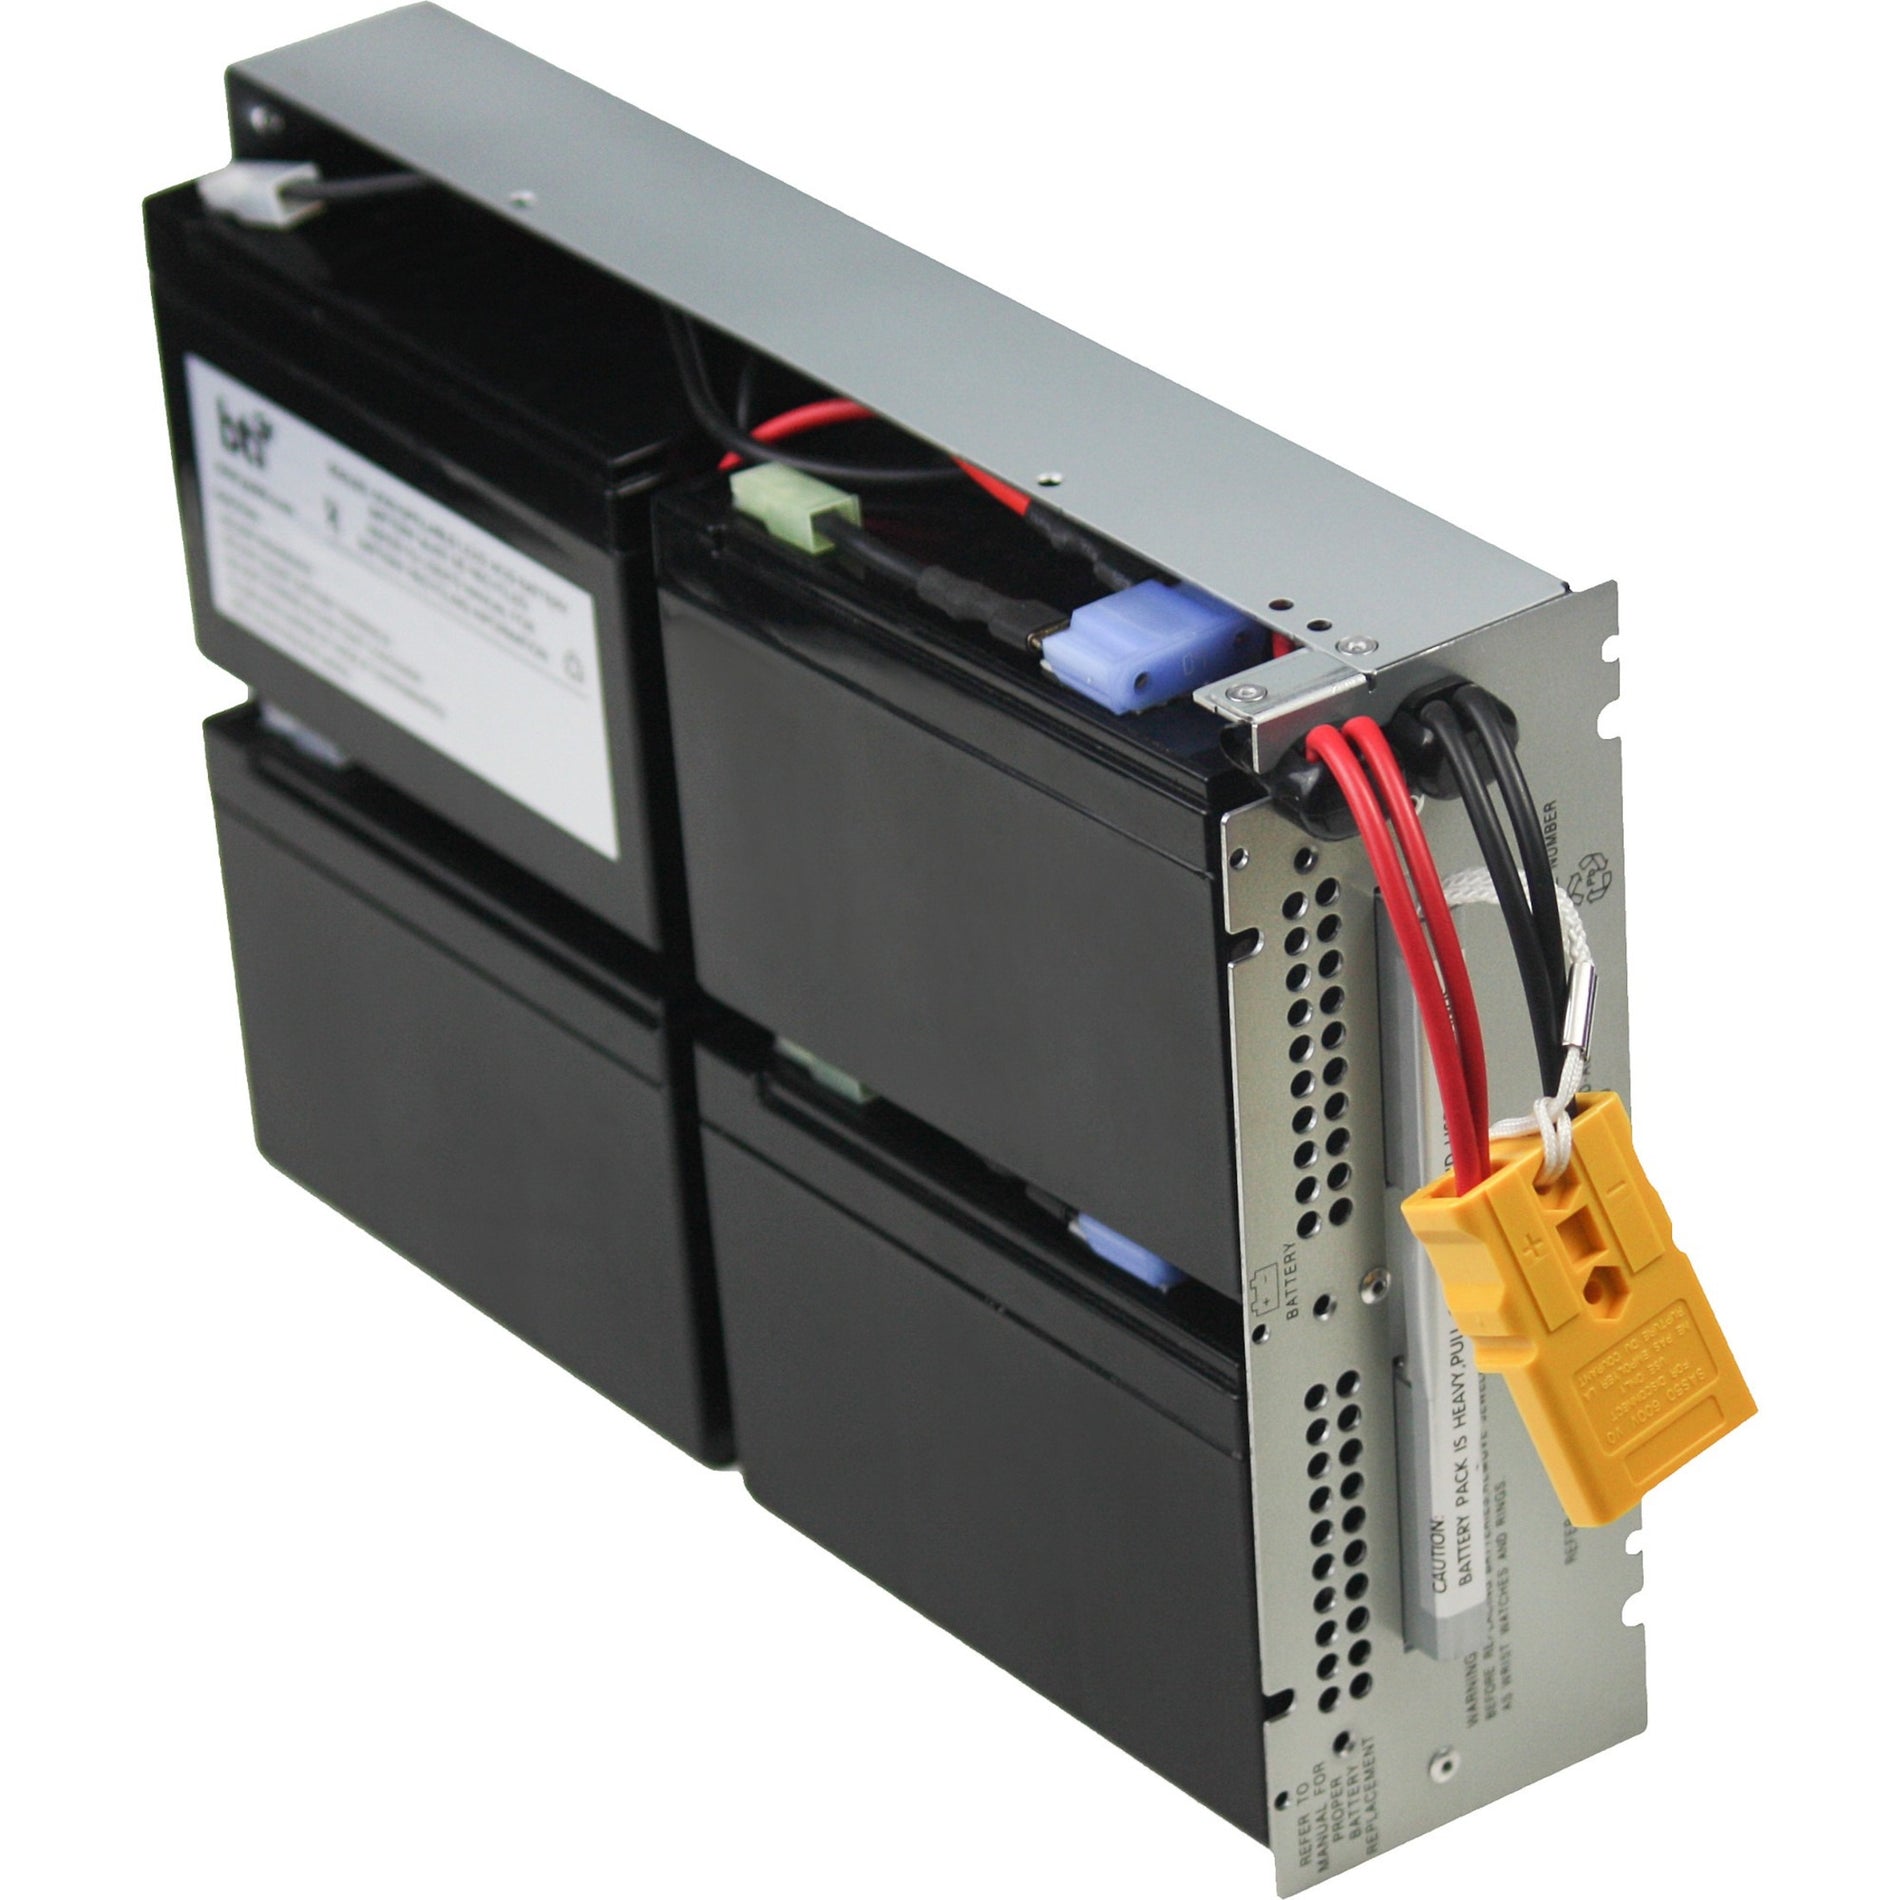 BTI APCRBC159-SLA159 UPS Battery Pack, 12V DC Lead Acid